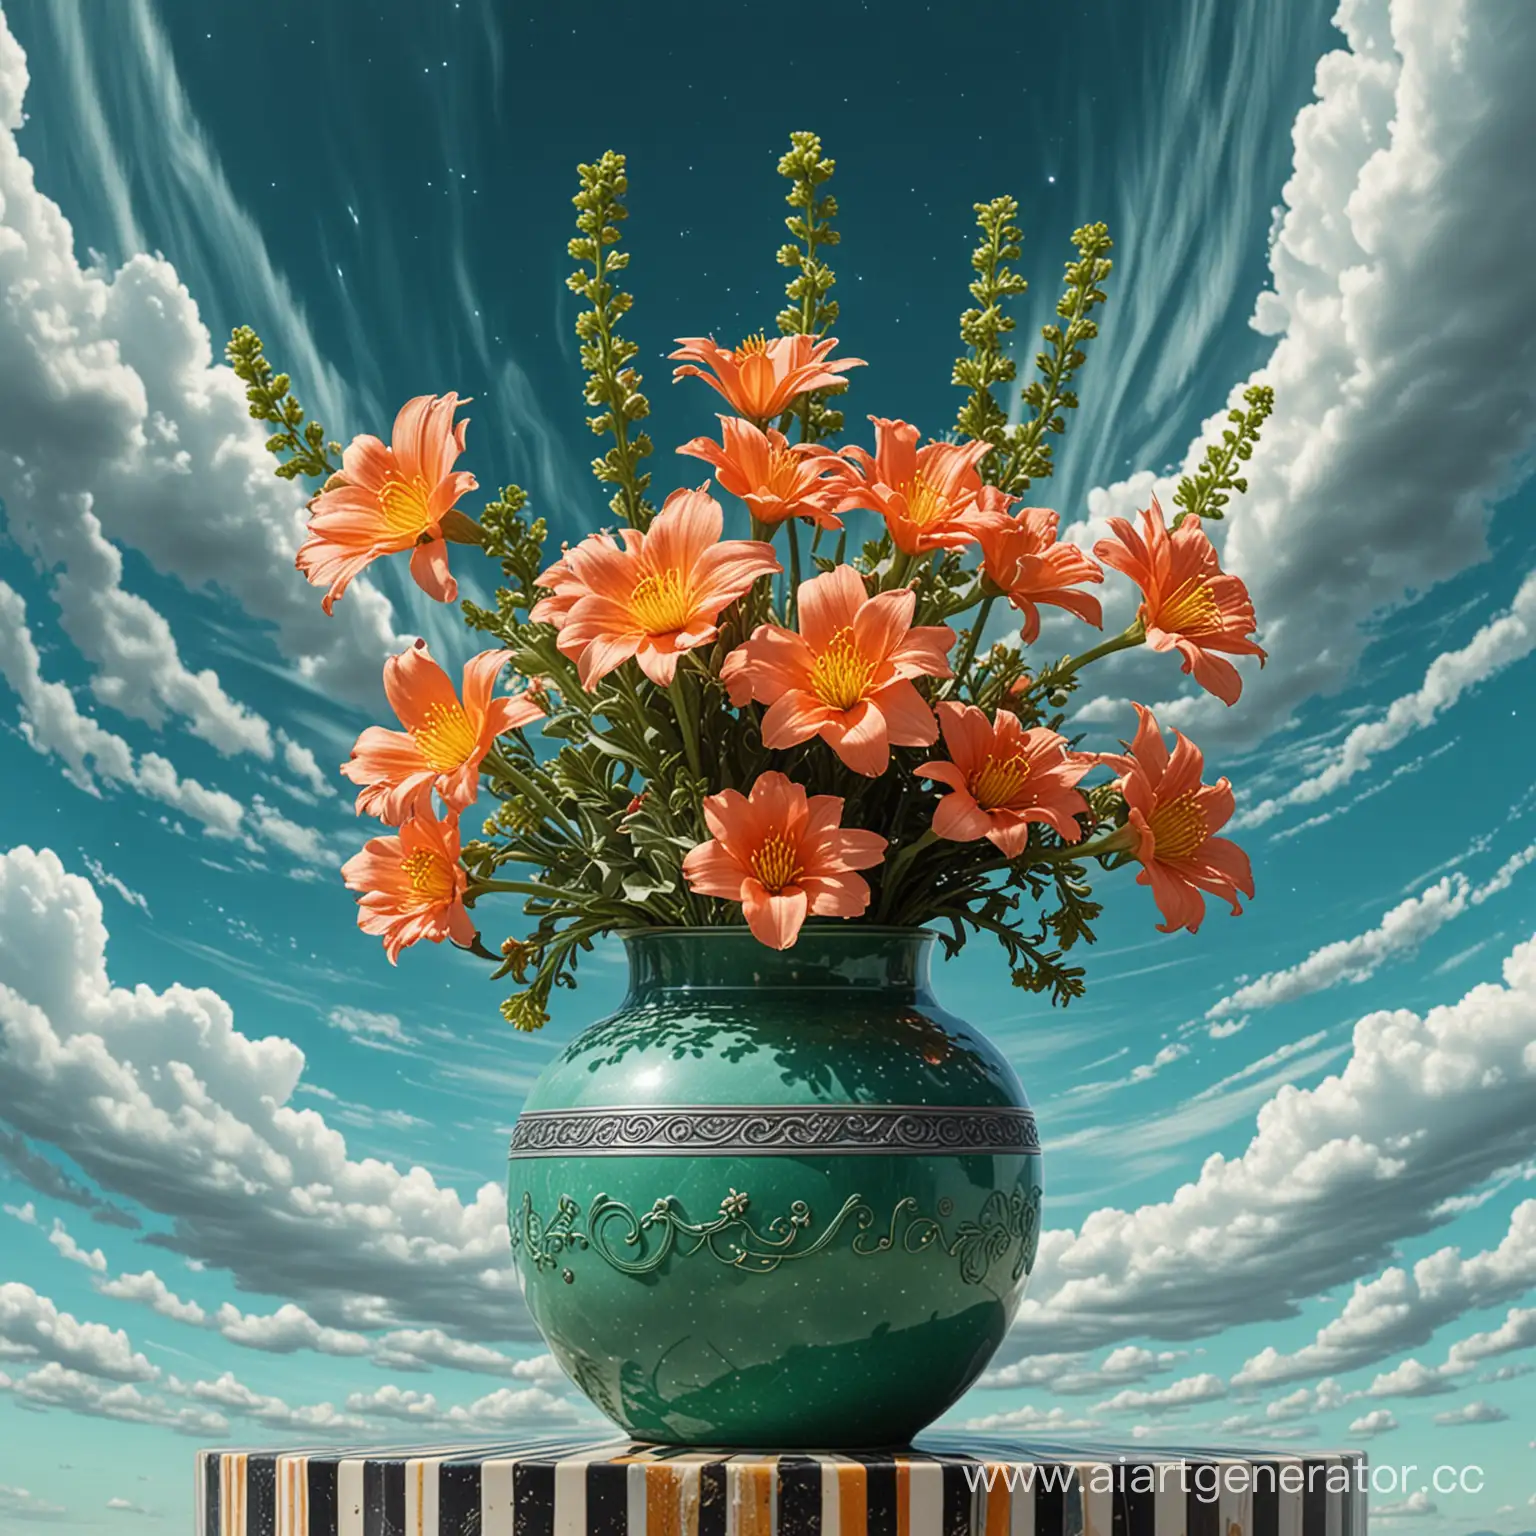 Intergalactic-Living-Flowers-in-a-Jade-Vase-Vibrant-Botanical-Arrangement-under-Electronic-Sky